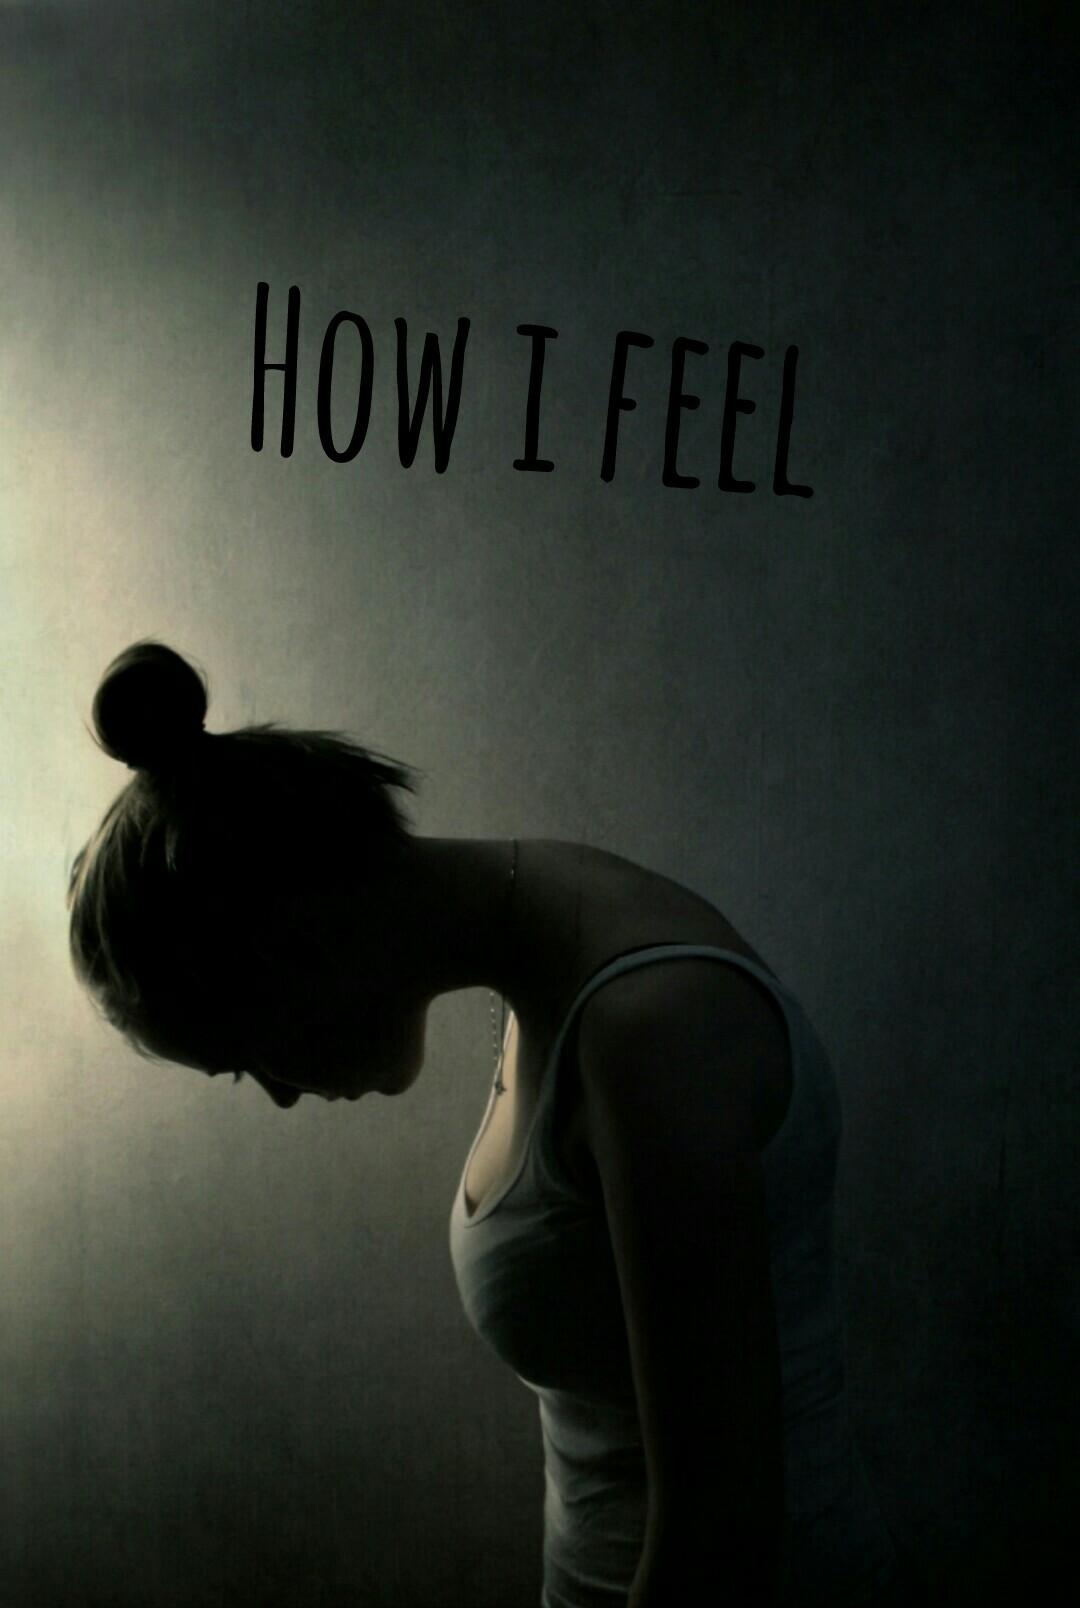 How i feel is depressed
😭😭😭😵😵😵😵😔😔😔